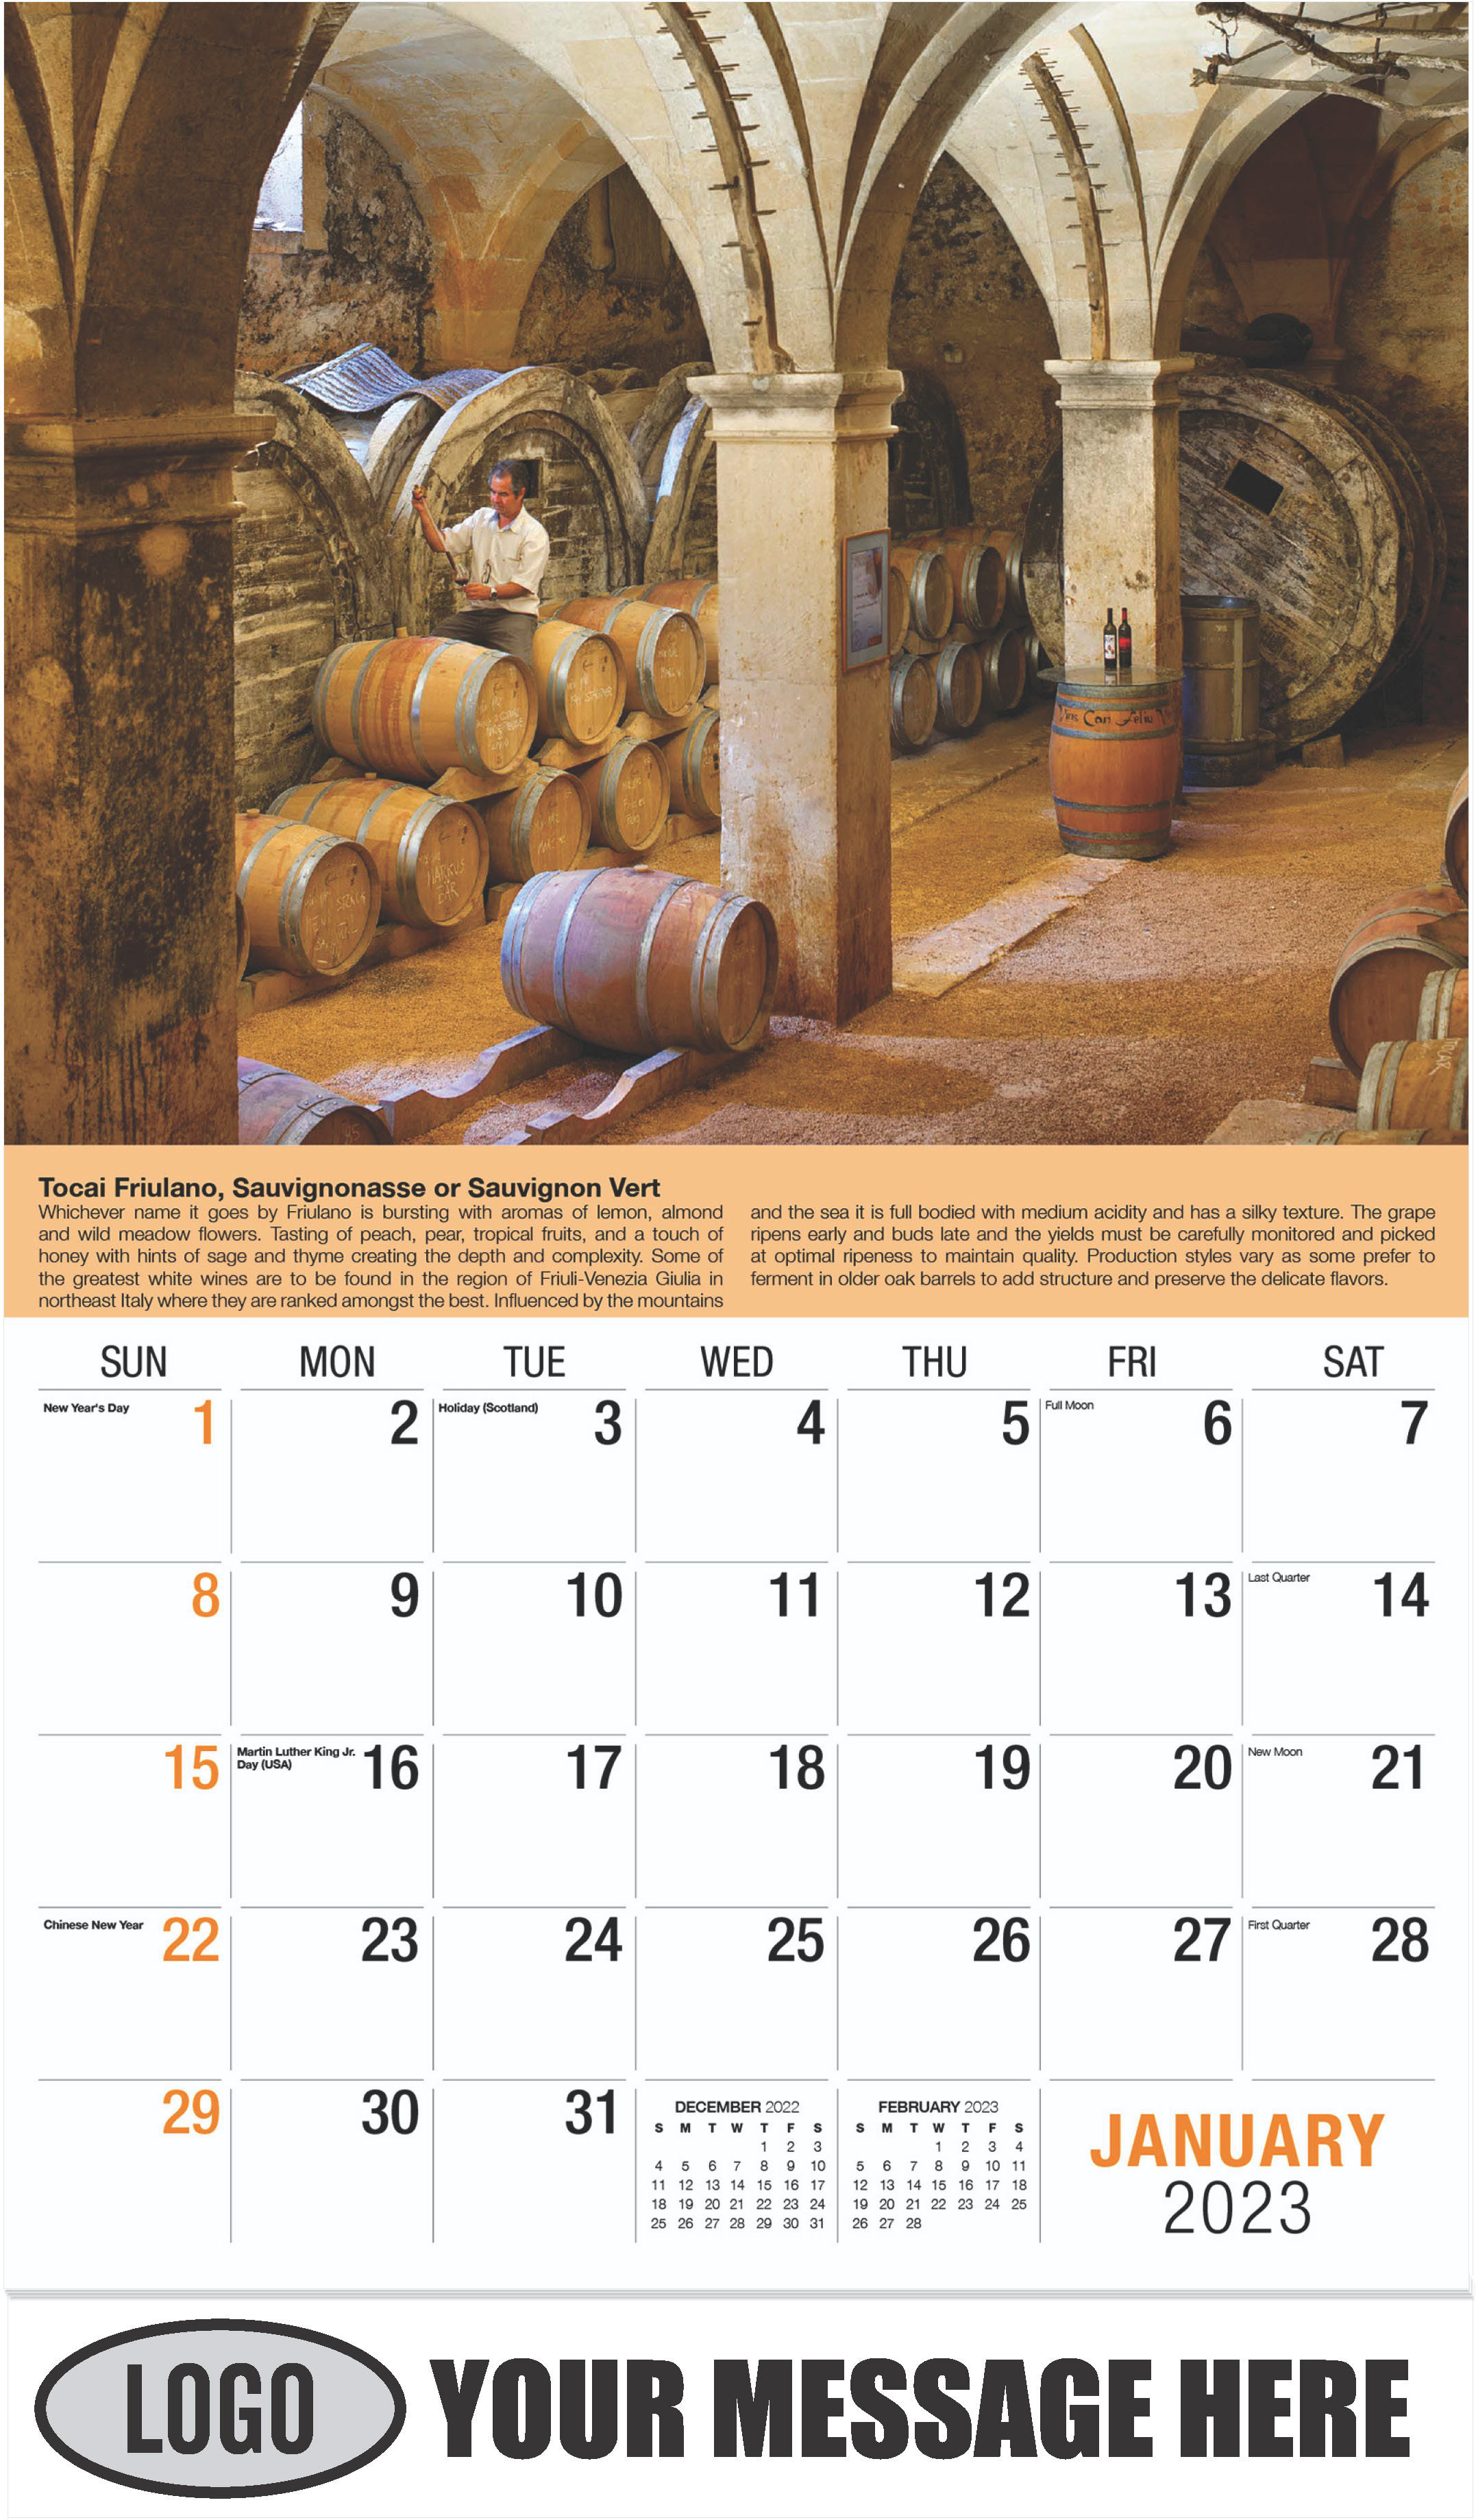 Wine Tips Calendar - January - Vintages 2023 Promotional Calendar